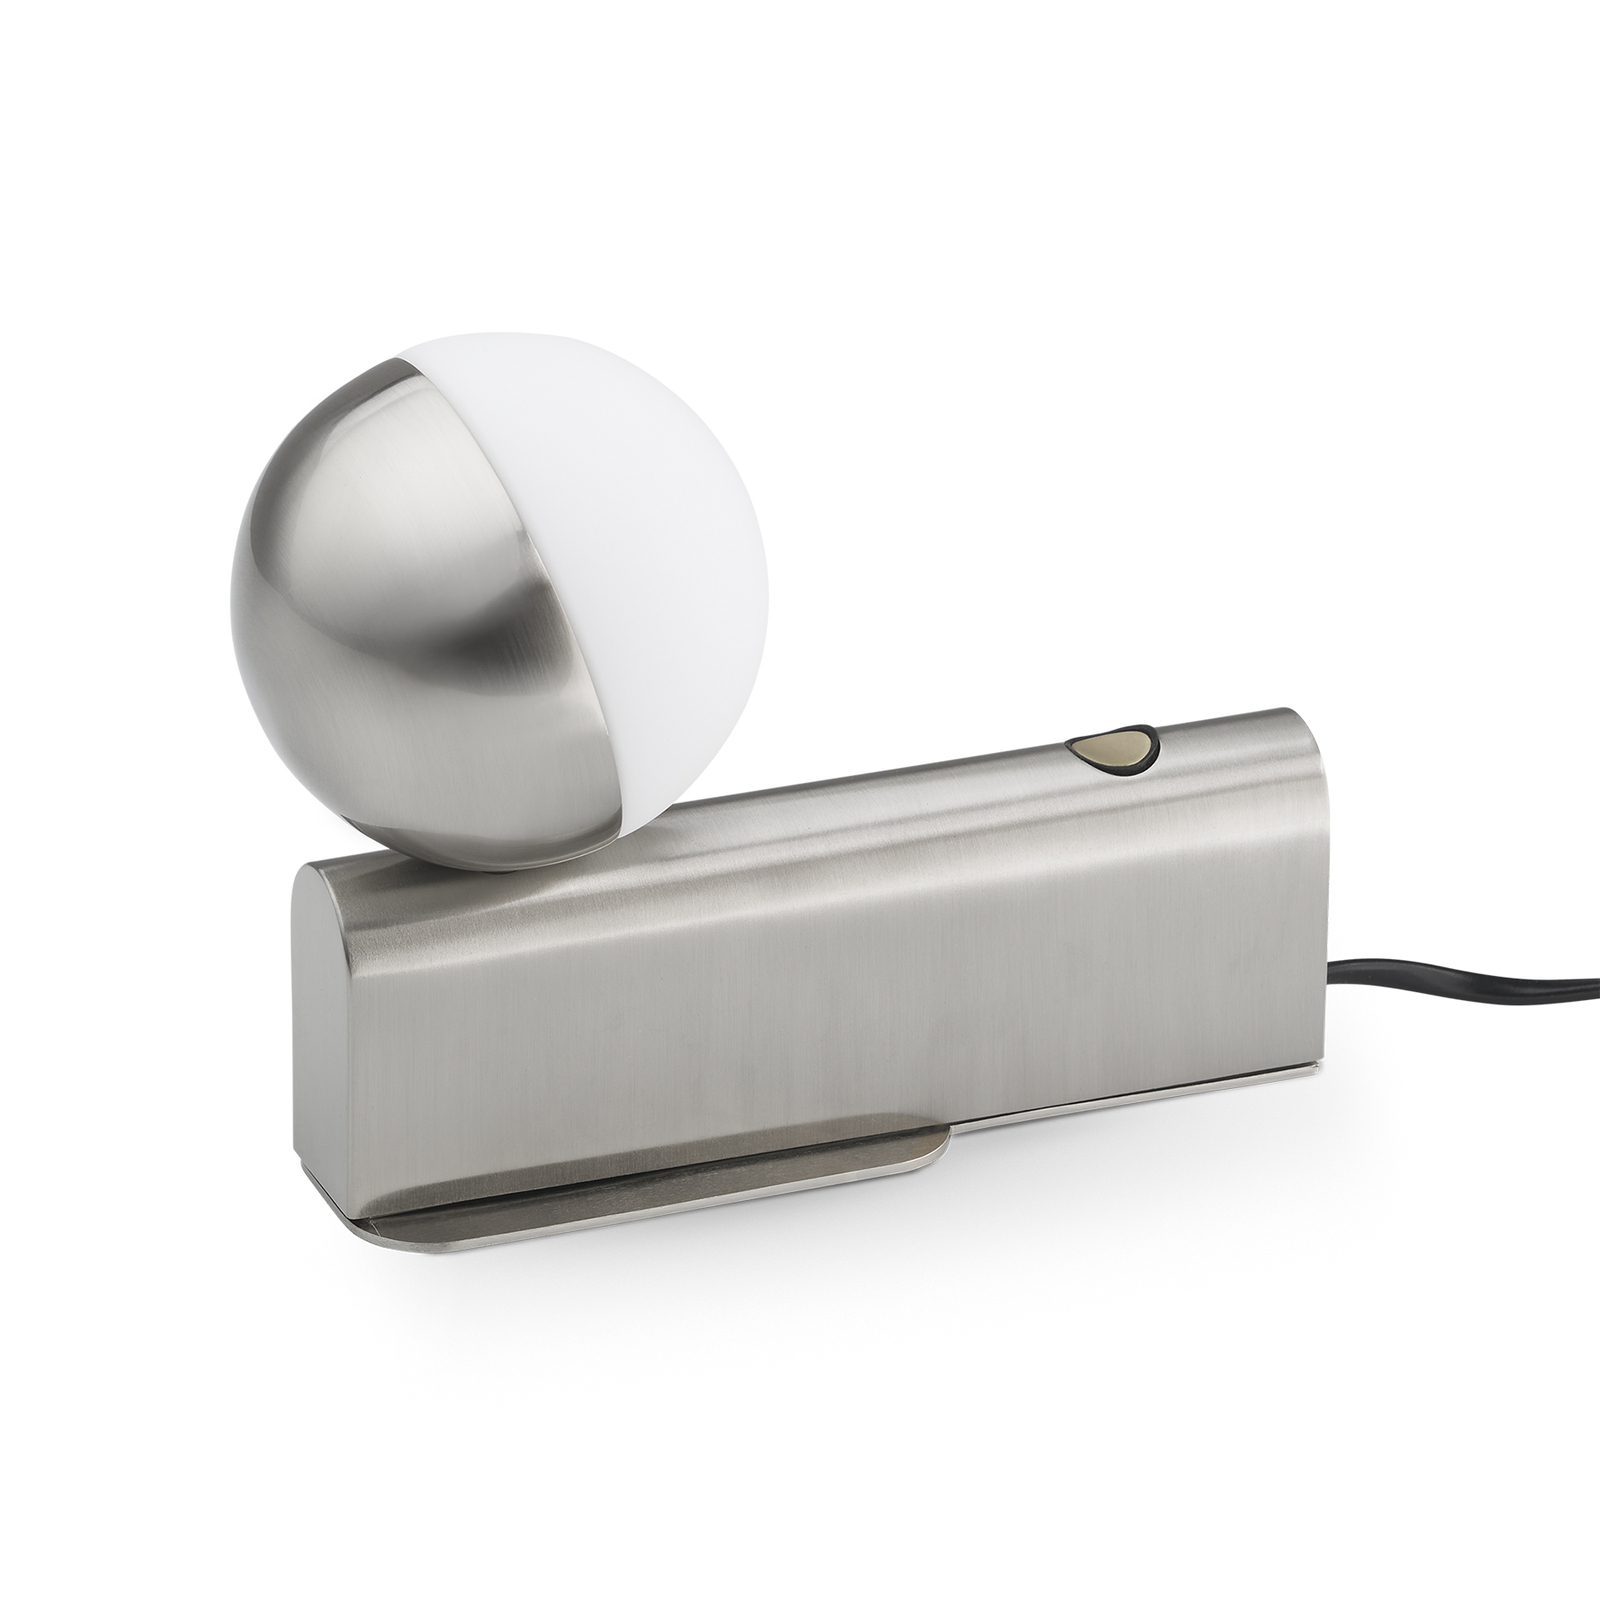 Northern Balancer mini light, UK plug, ατσάλινο